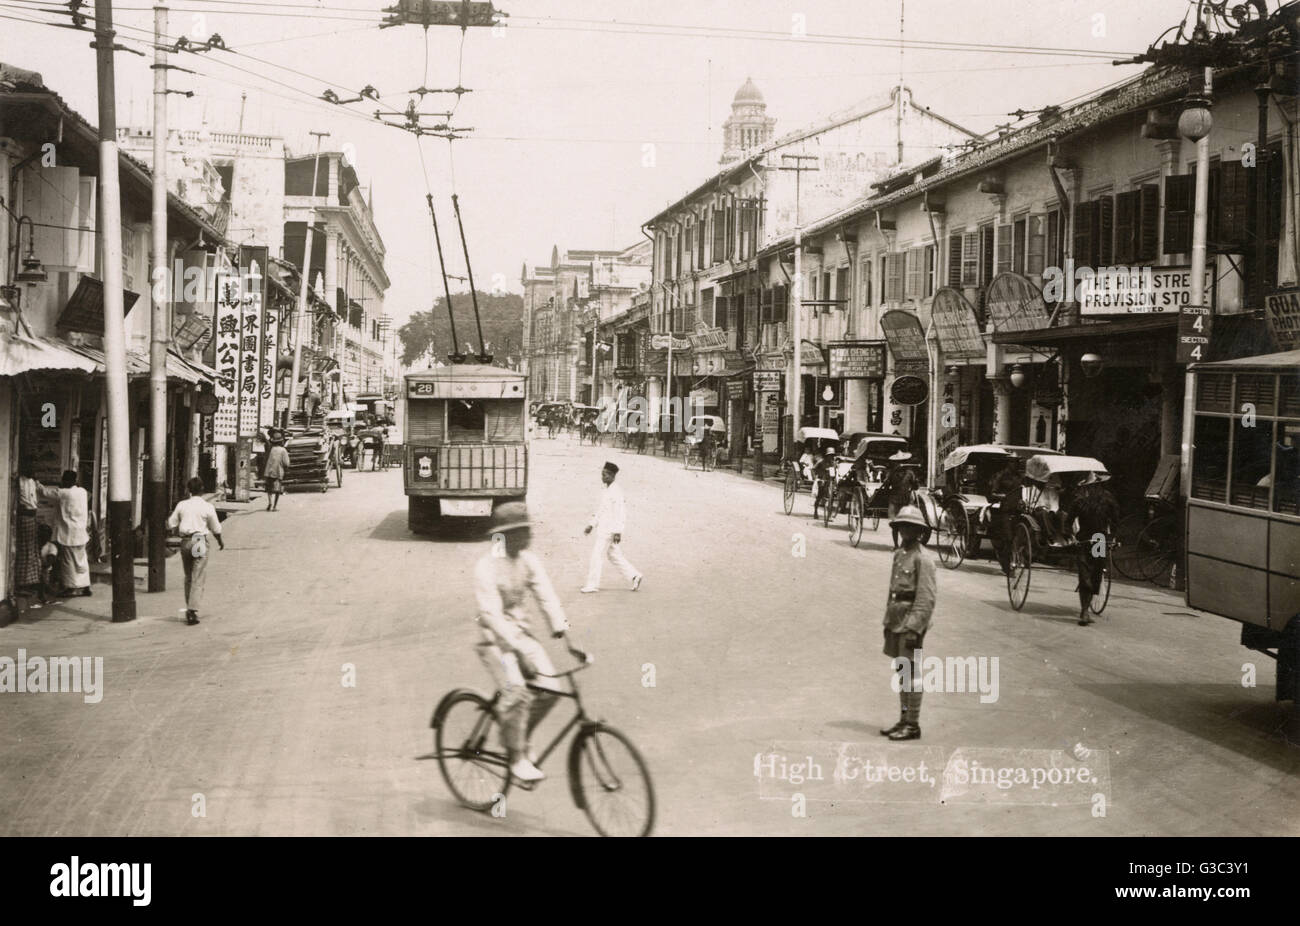 High Street con trolley bus no. 28, Singapur. Fecha: circa 1920 Foto de stock